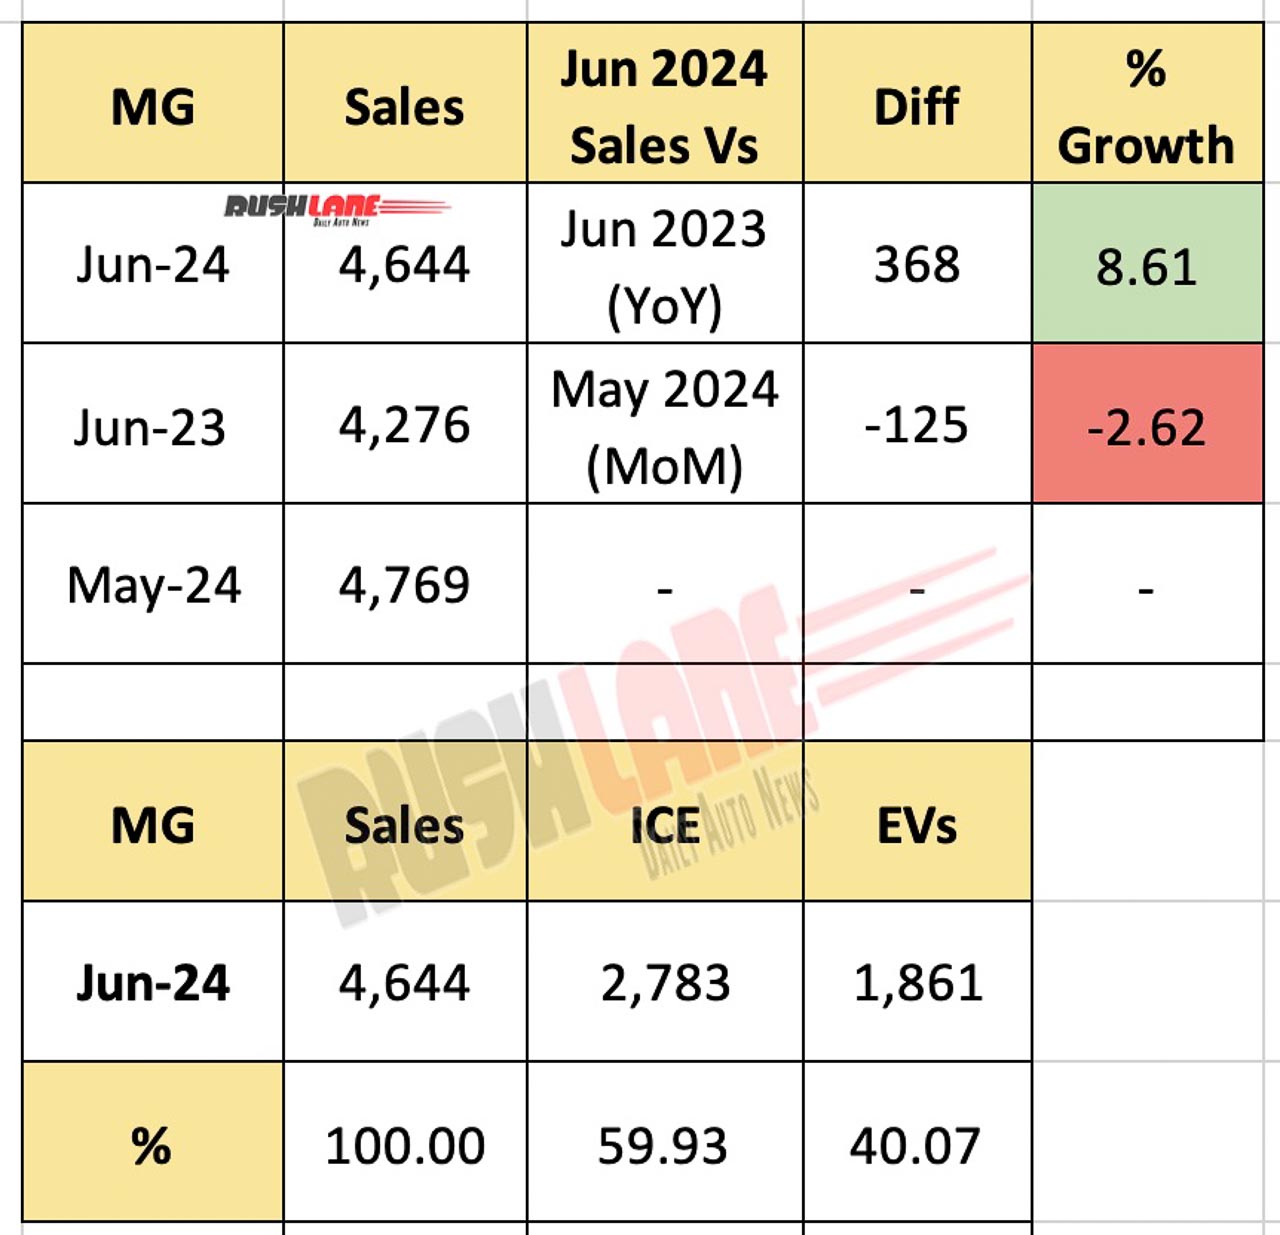 MG June 2024 Sales